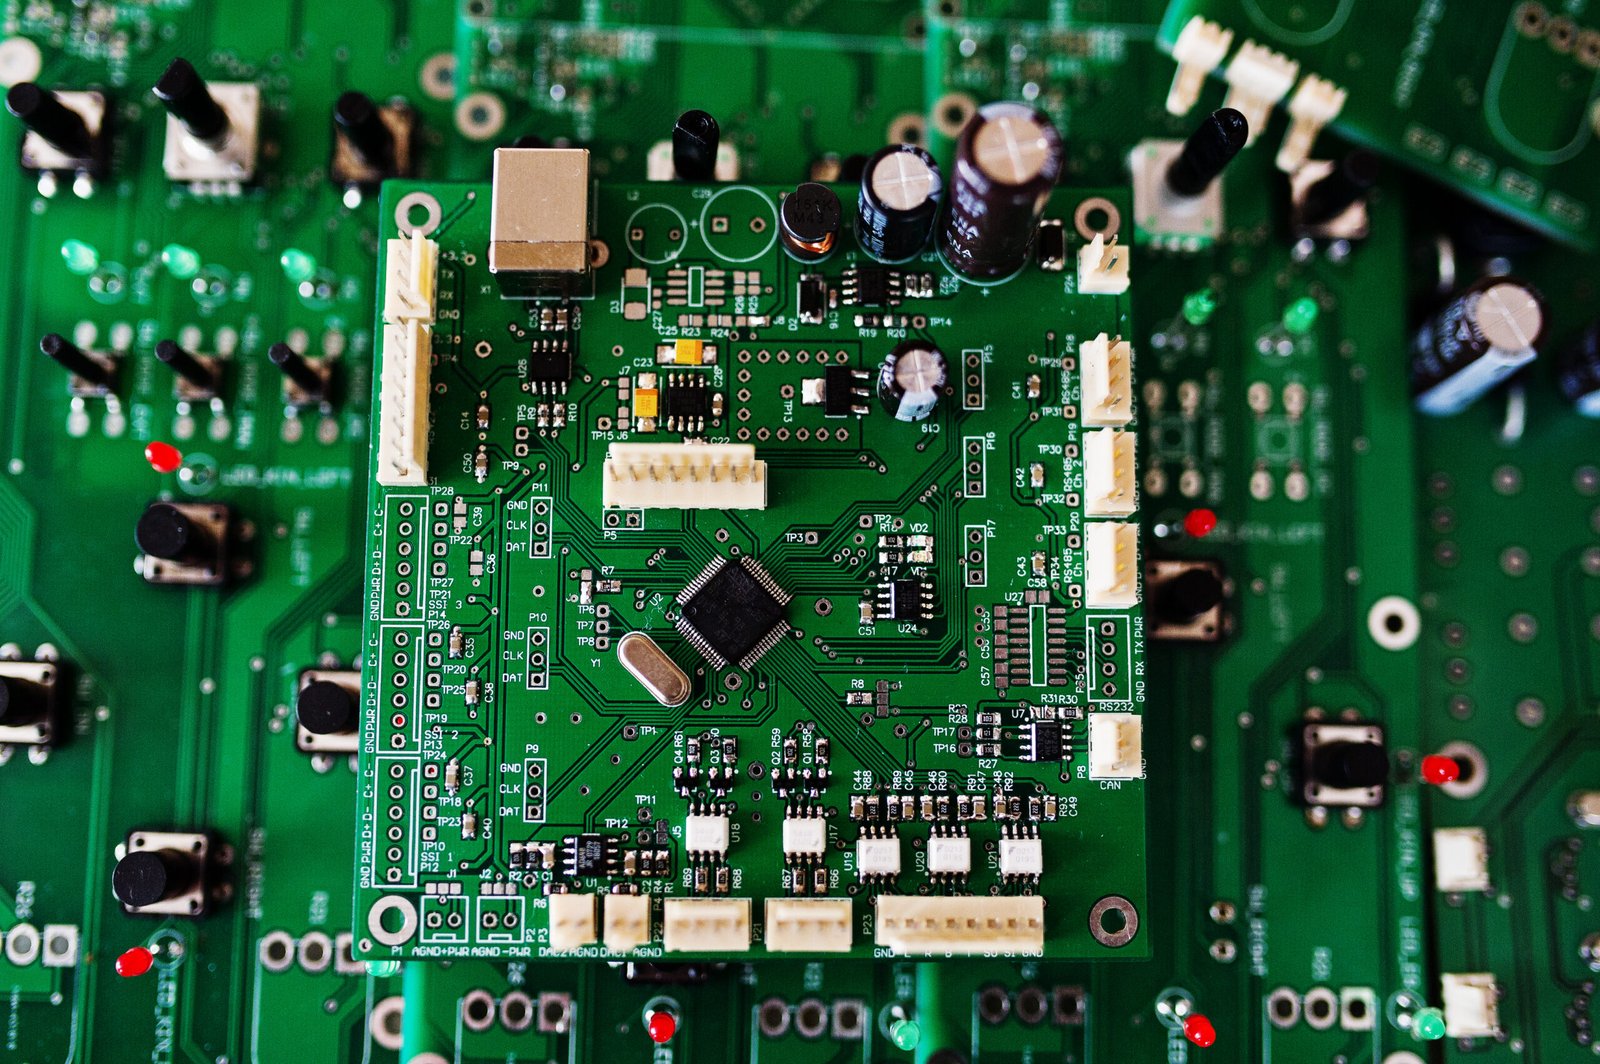 Placa de circuitos da tecnologia de hardware de computador eletrónico